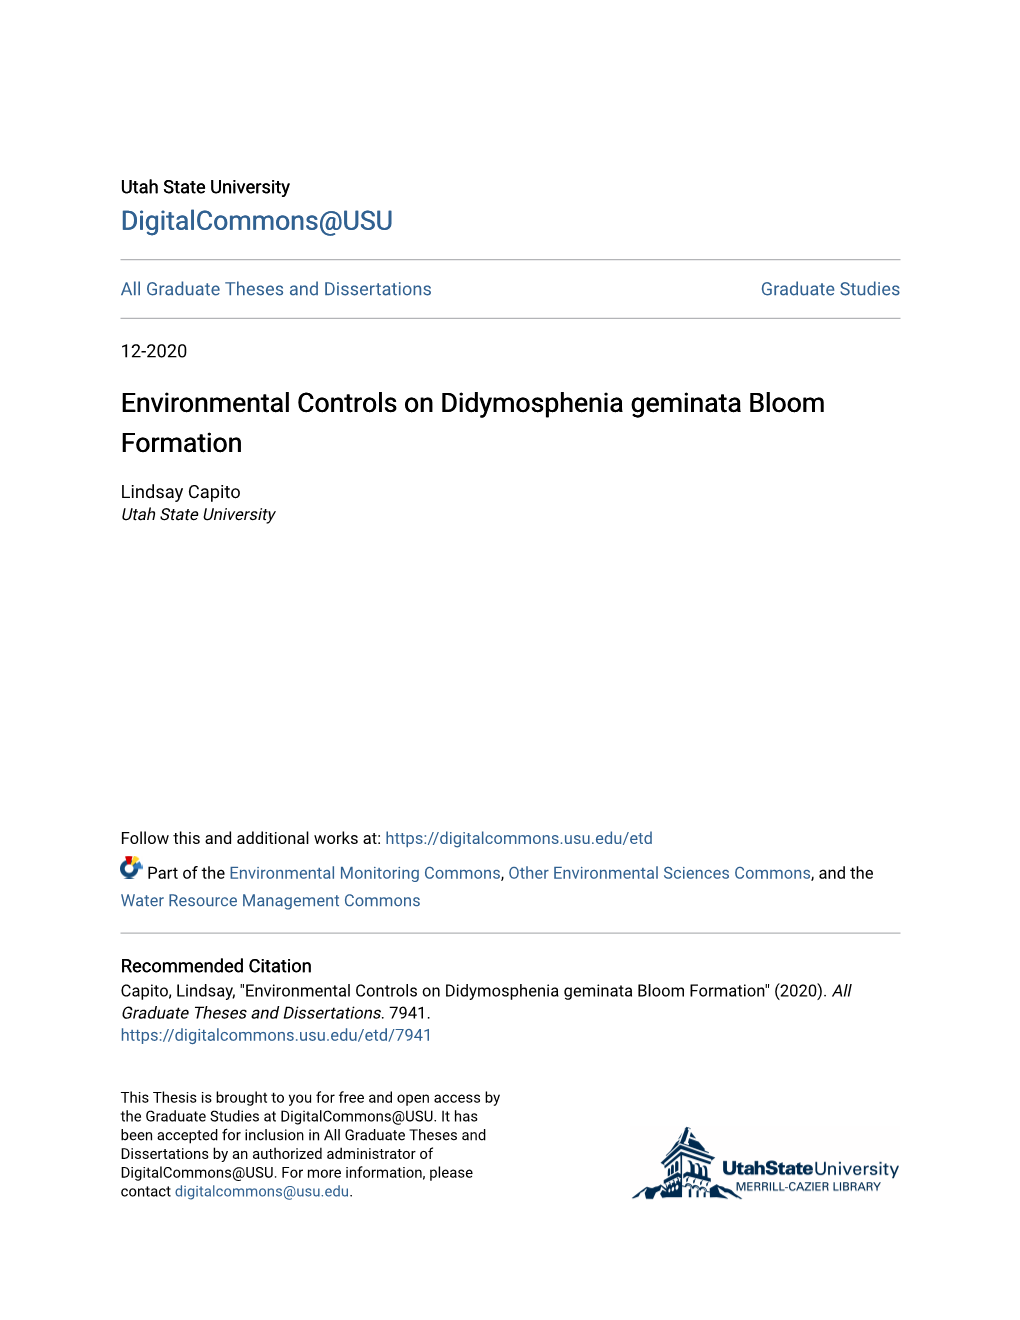 Environmental Controls on Didymosphenia Geminata Bloom Formation